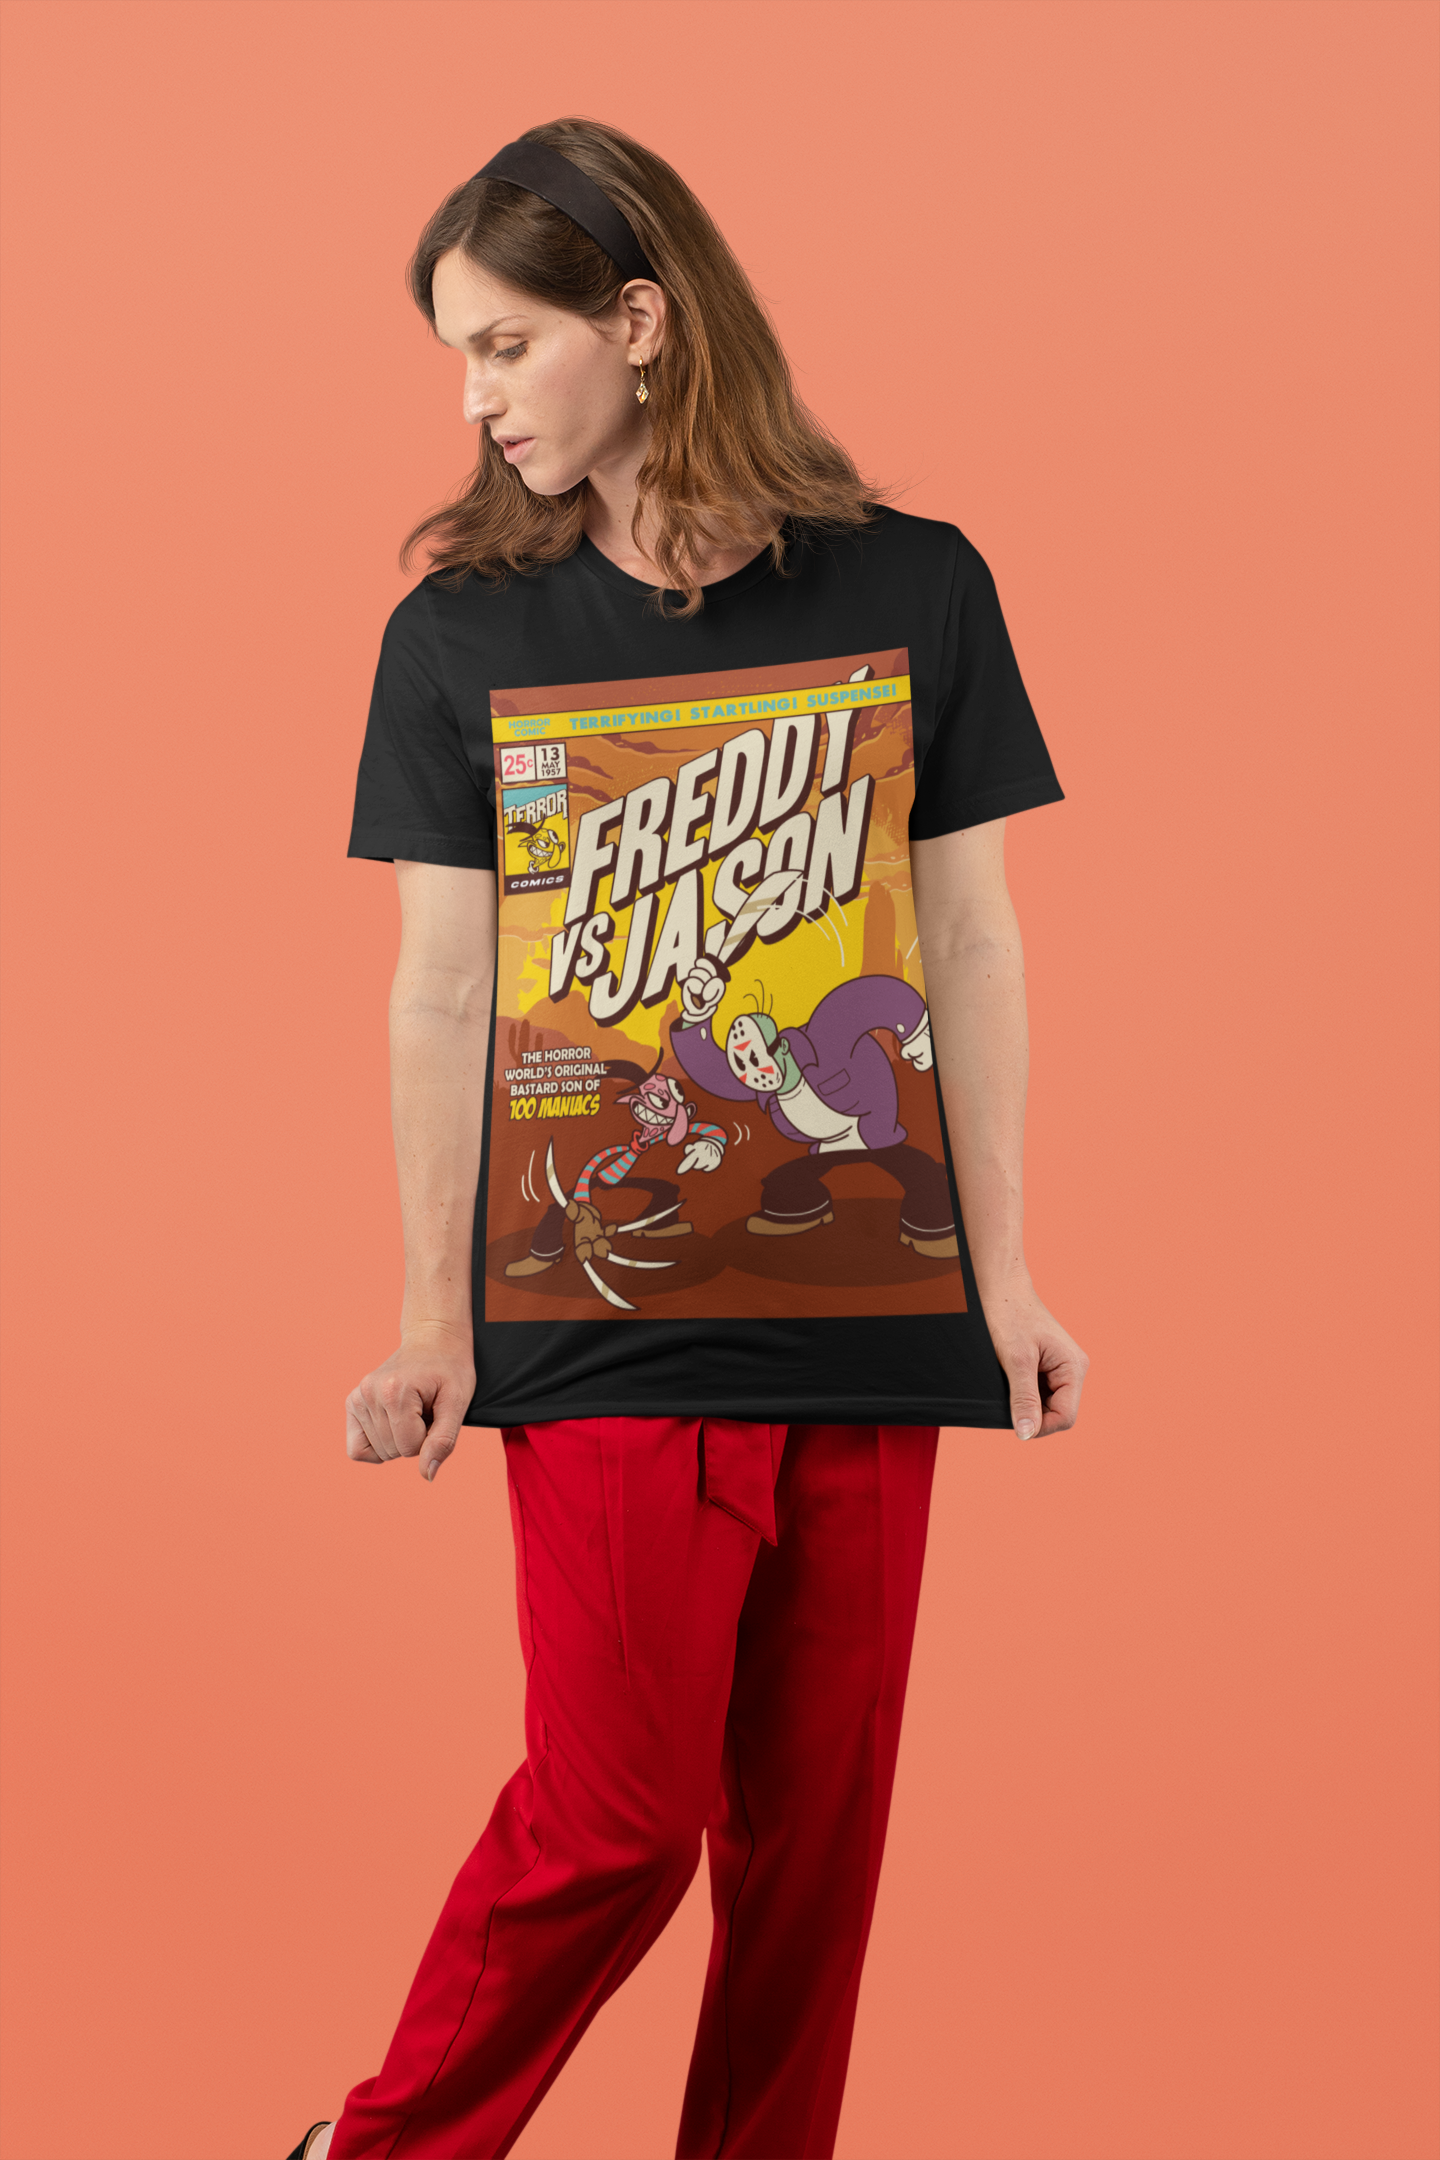 Freddy Vs Jason Comic Cover Reproduction T-Shirt